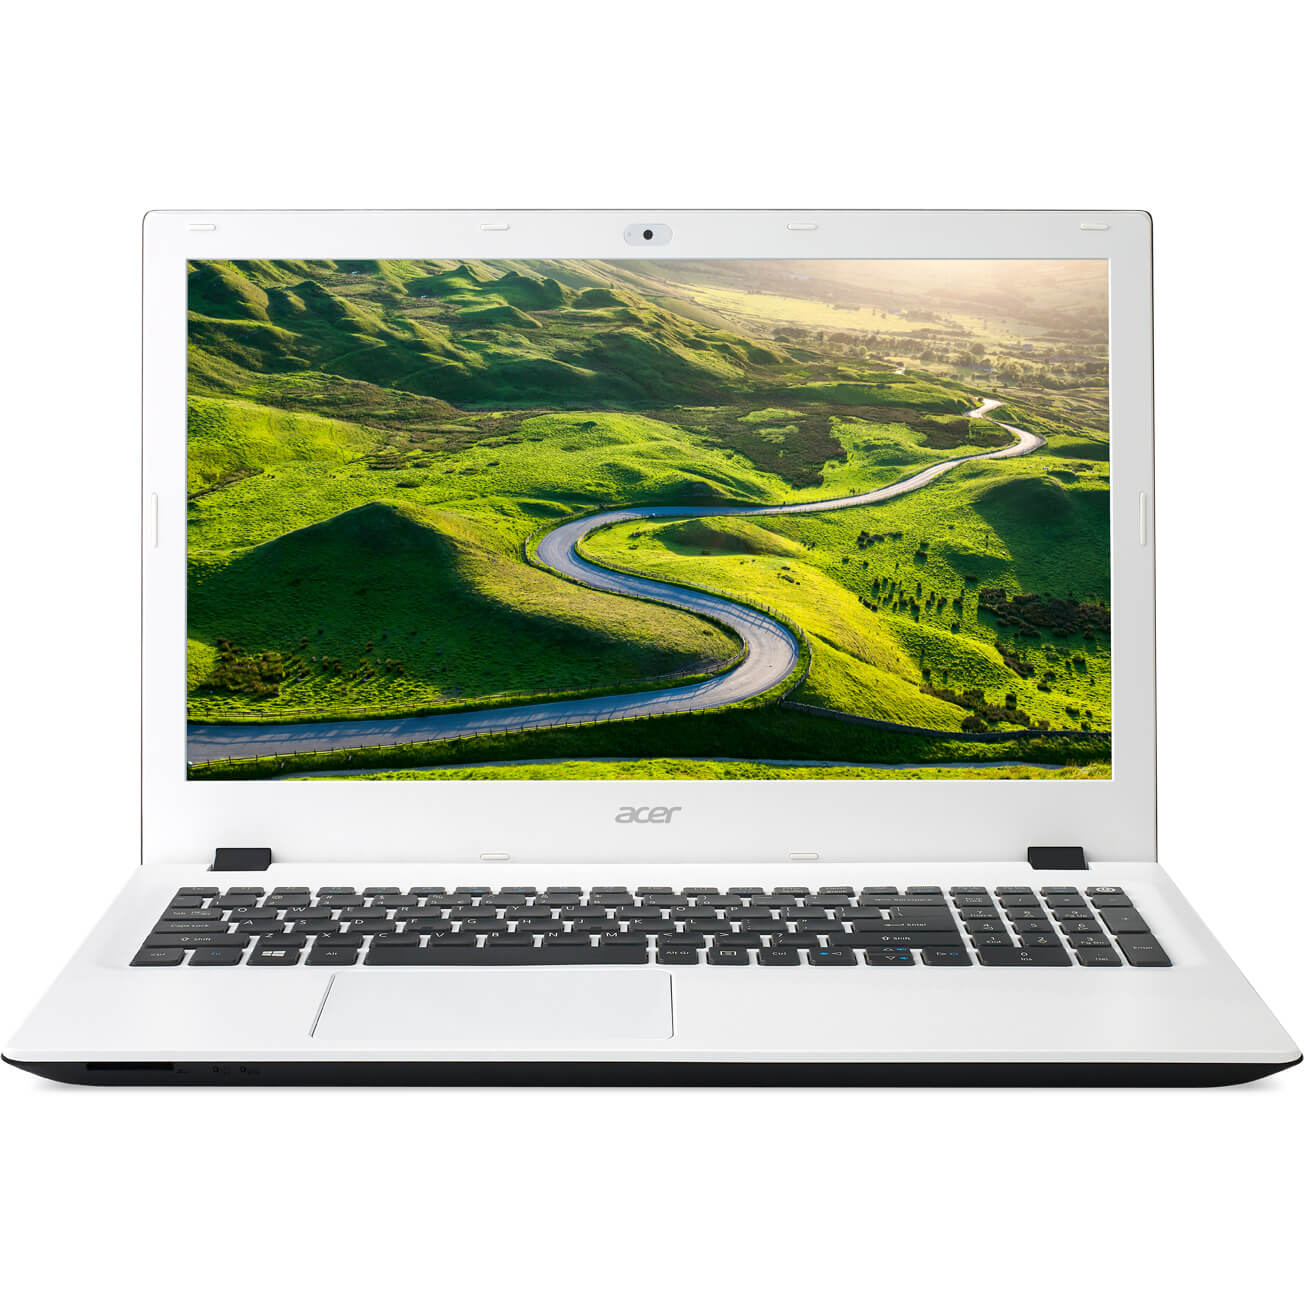  Laptop Acer E5-573-C1ZV, Intel Celeron 2957U, 4GB DDR3, HDD 500GB, Intel HD Graphics, Linux 